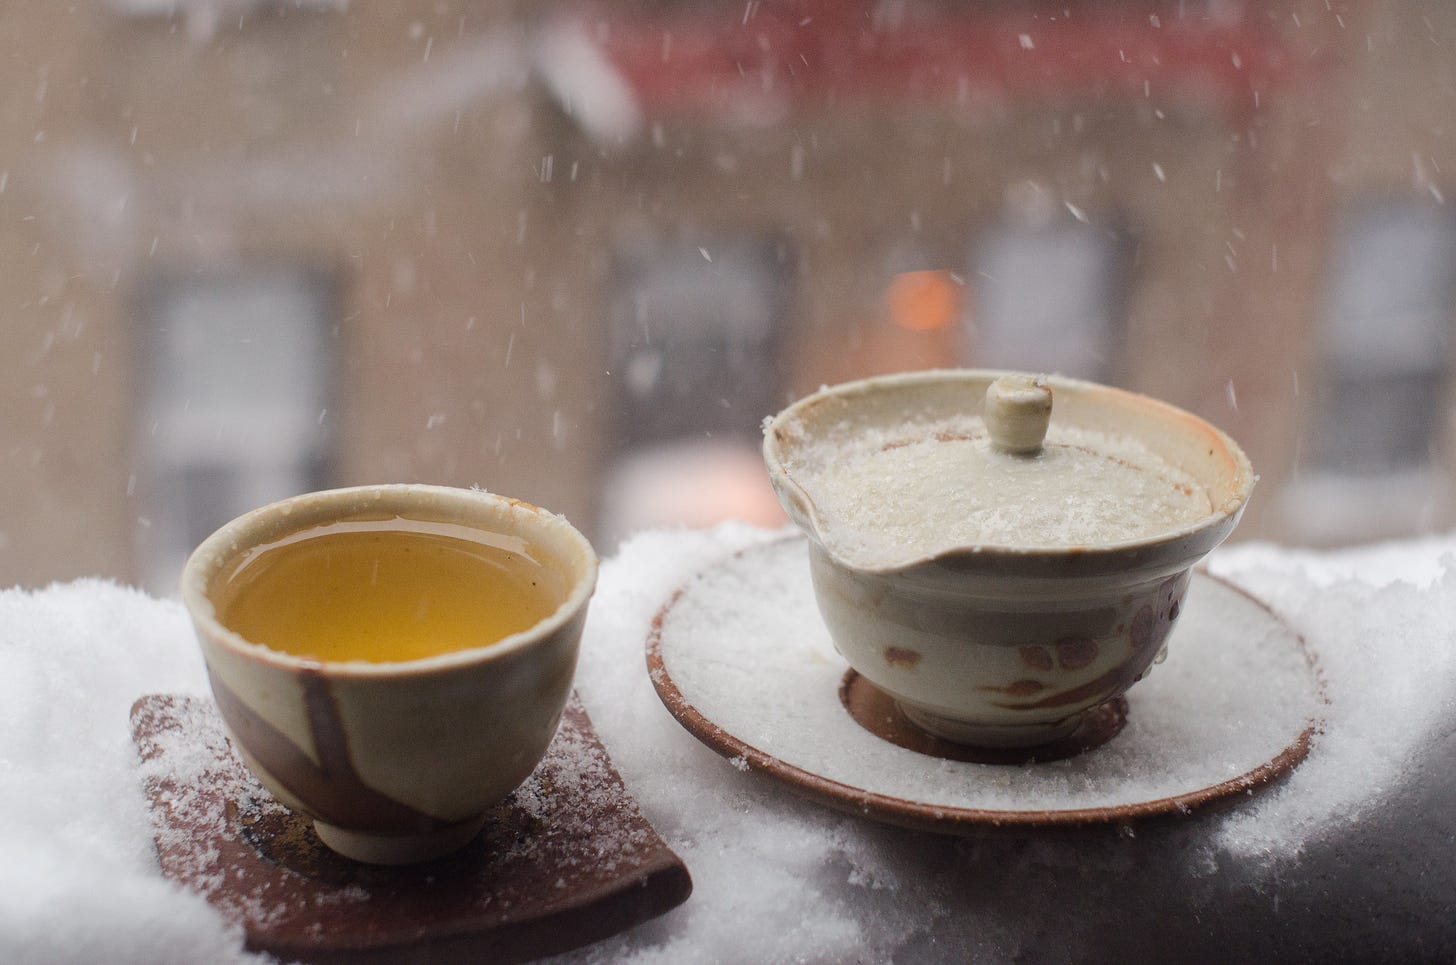 ID: Small teacup and pot on a snowy windowsill